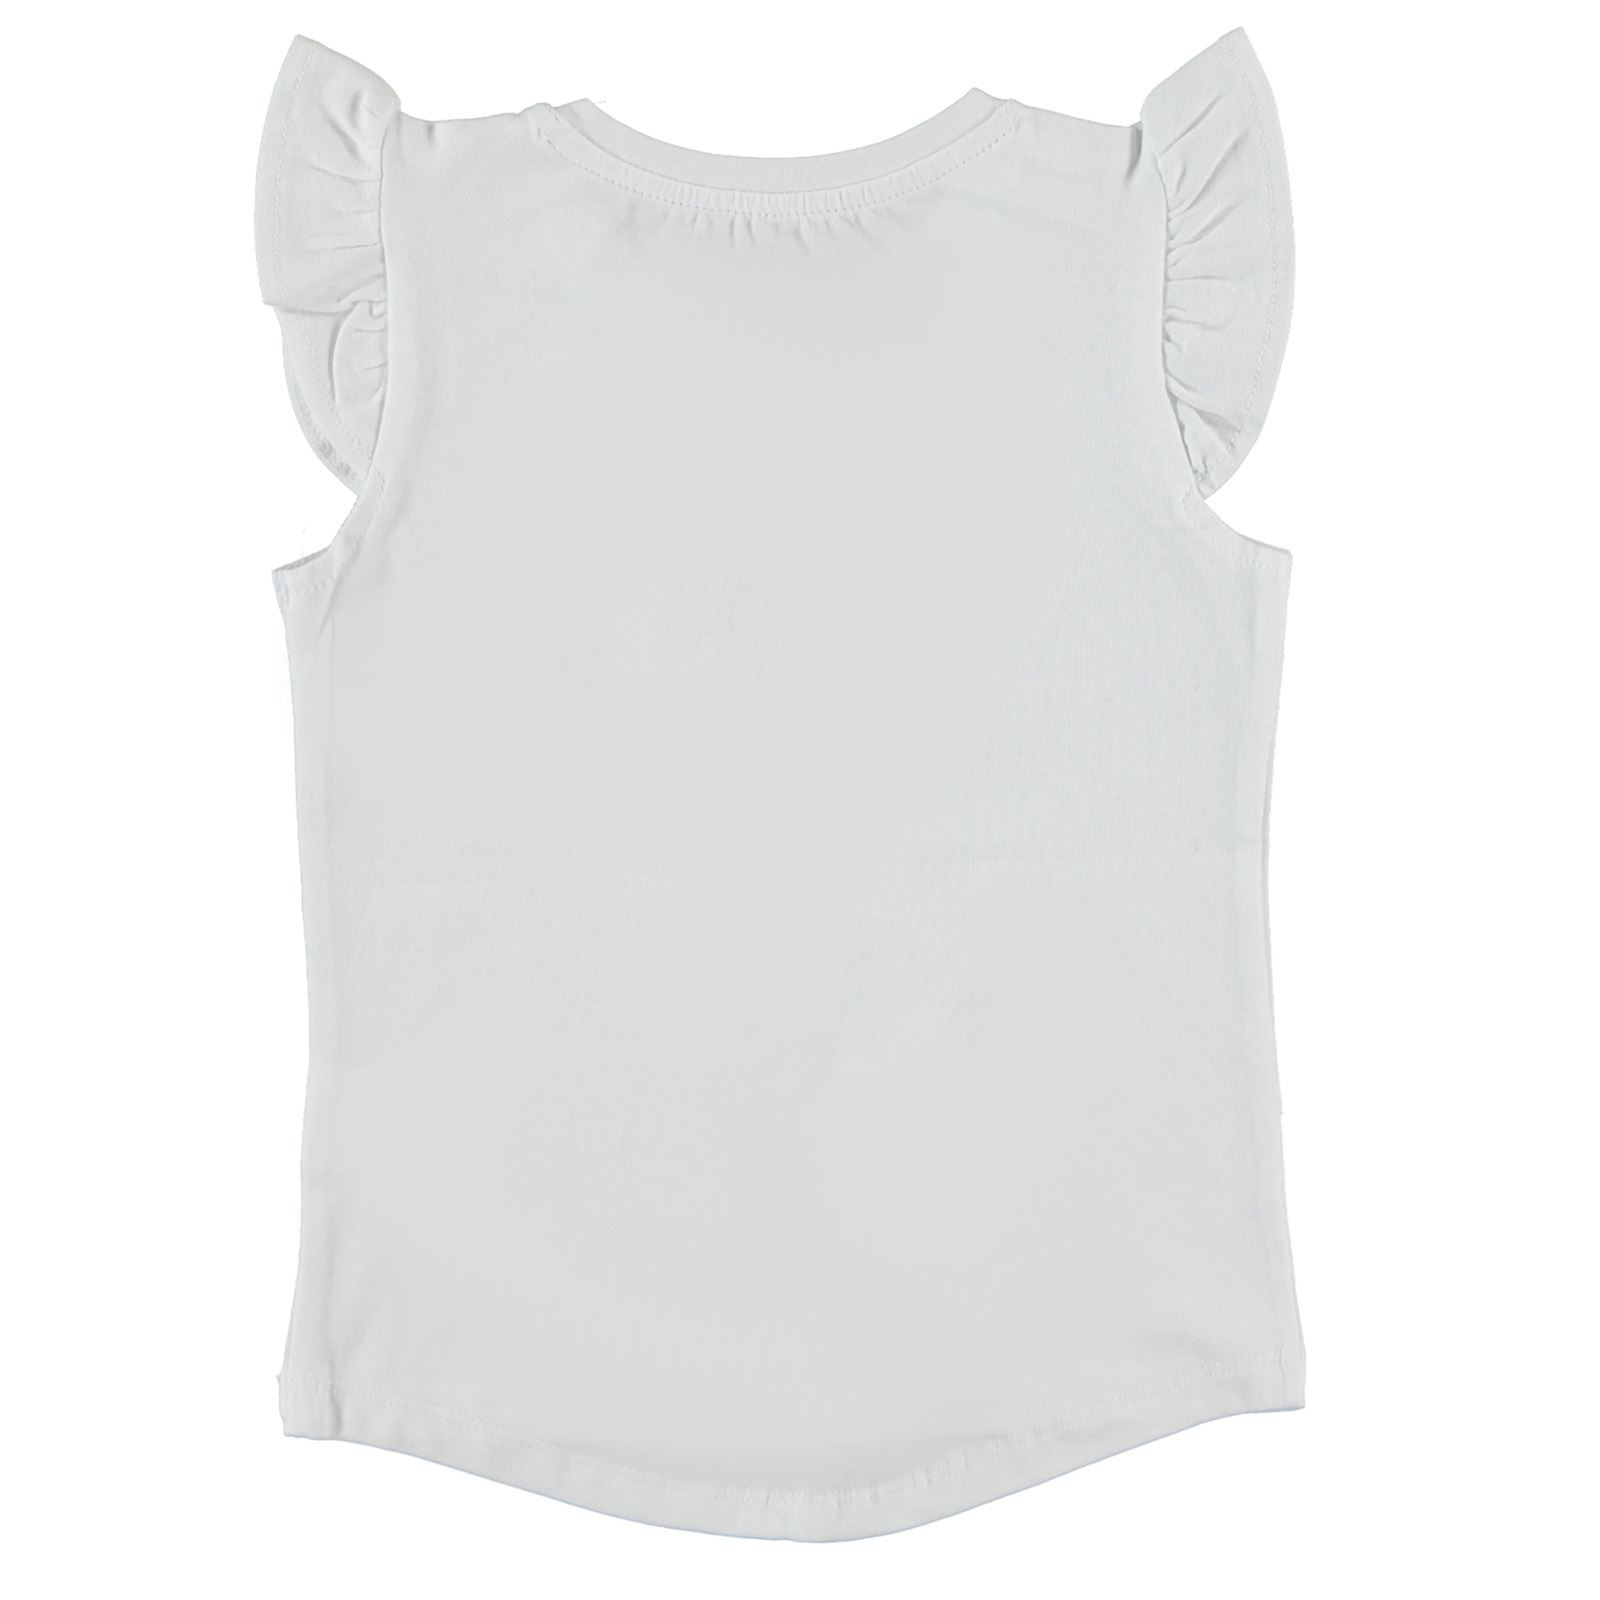 Cvl Kız Çocuk Çantalı Tişört 2-5 Yaş Beyaz